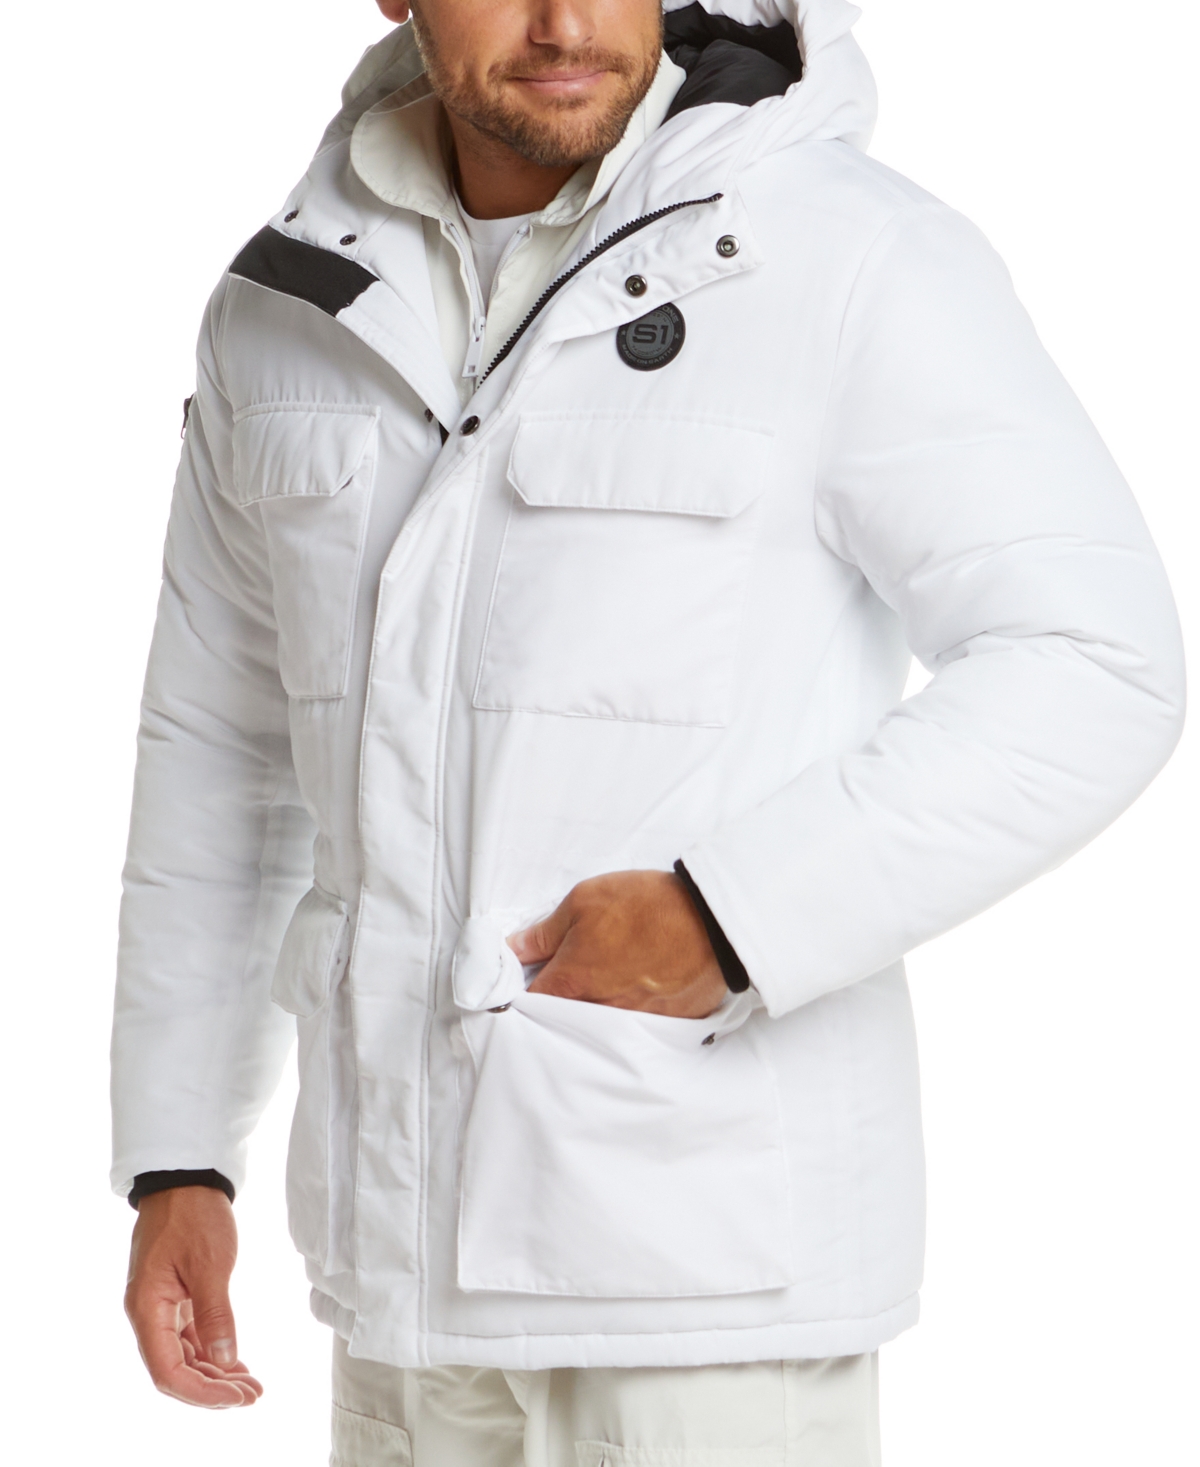 Men's Nasa Inspired Parka Jacket with Printed Astronaut Interior - White